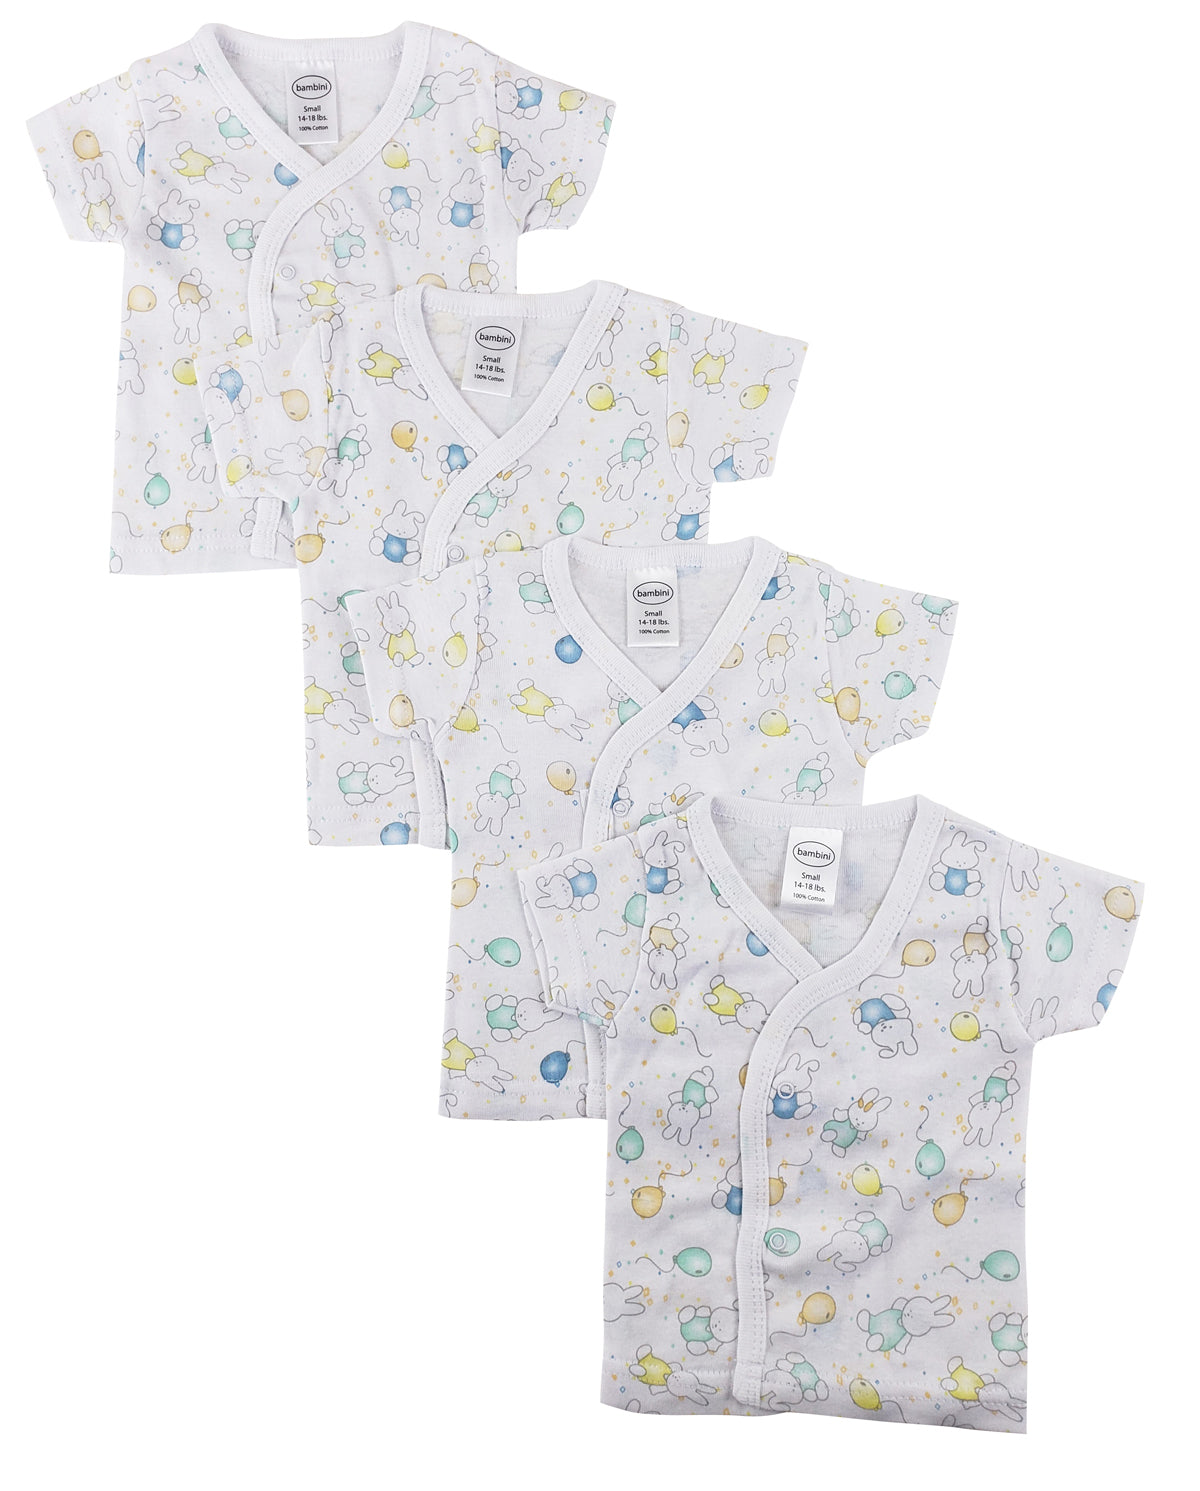 Infant Side Snap Short Sleeve Shirt - 4 Pack NC_0205